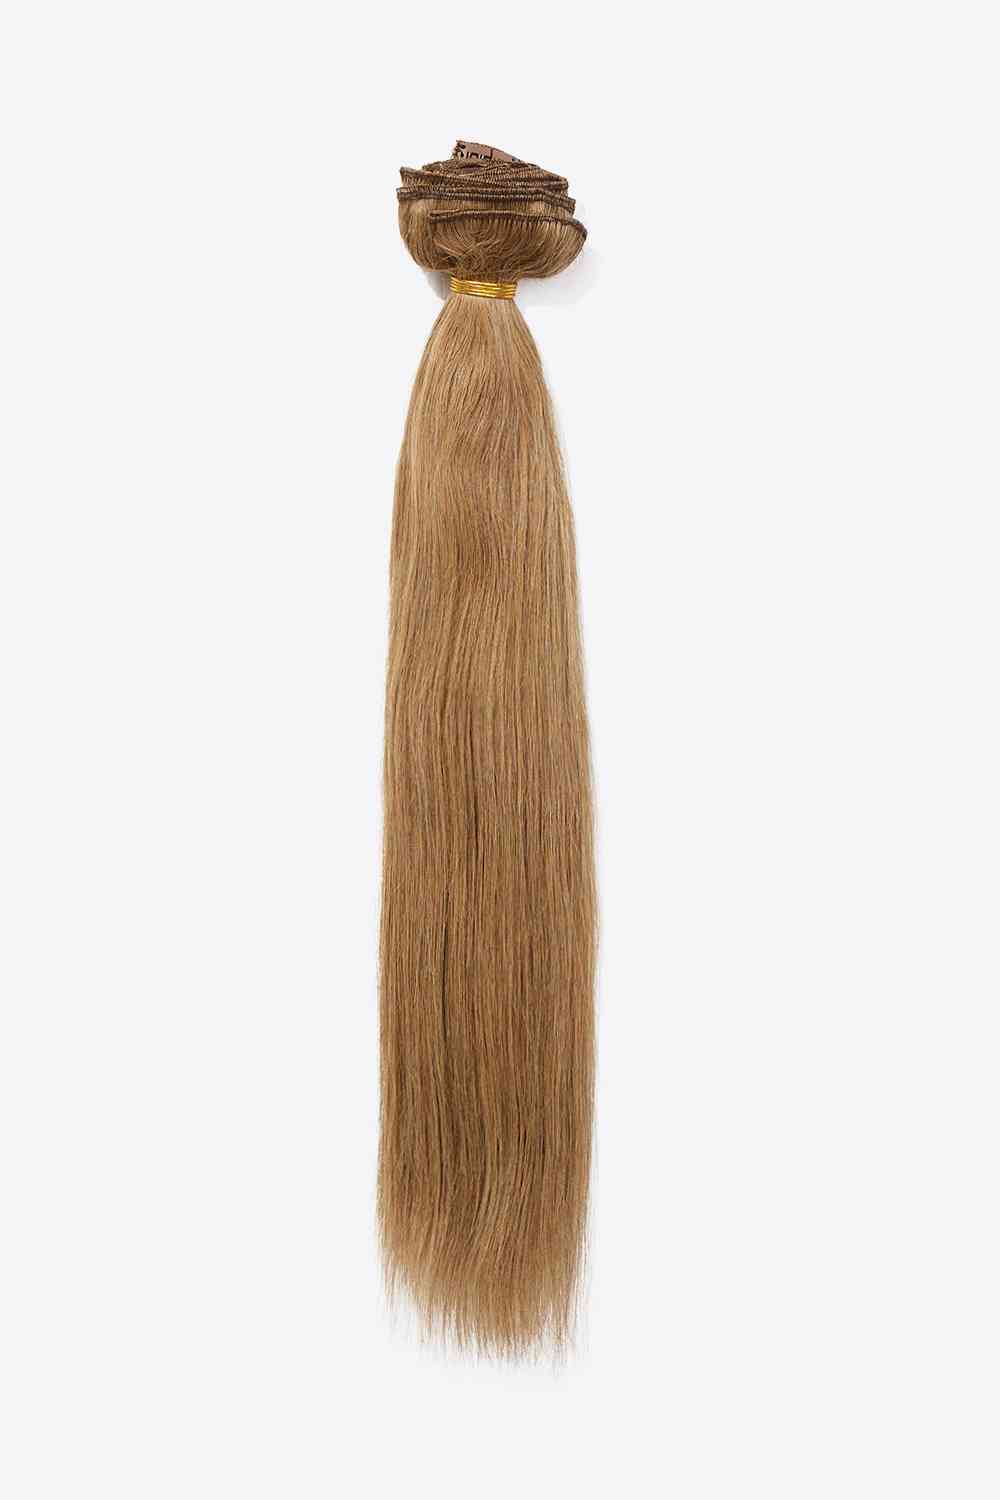 16'' 100g #10 Clip-in Hair Extensions Human Virgin Hair Brown Light Brown/Blonde Highlights